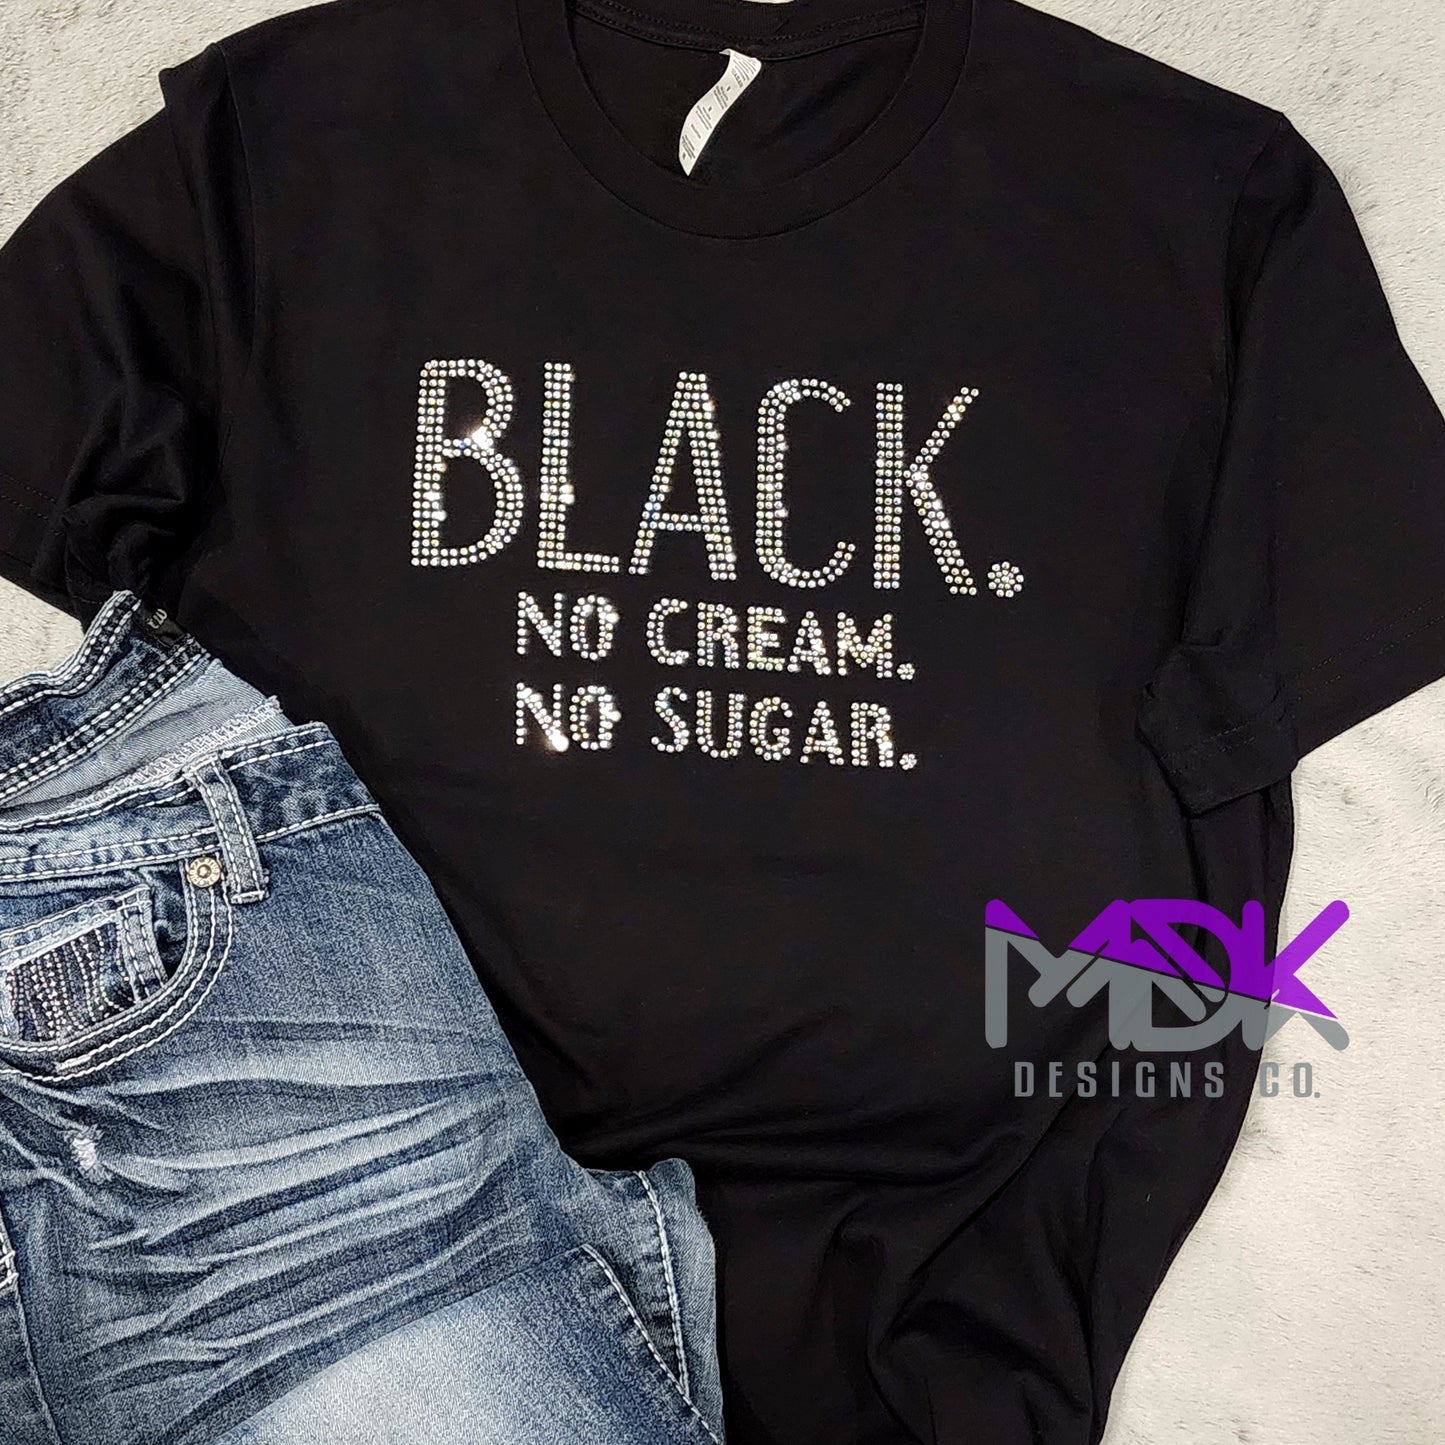 Black No Cream No Sugar Rhinestone Shirt